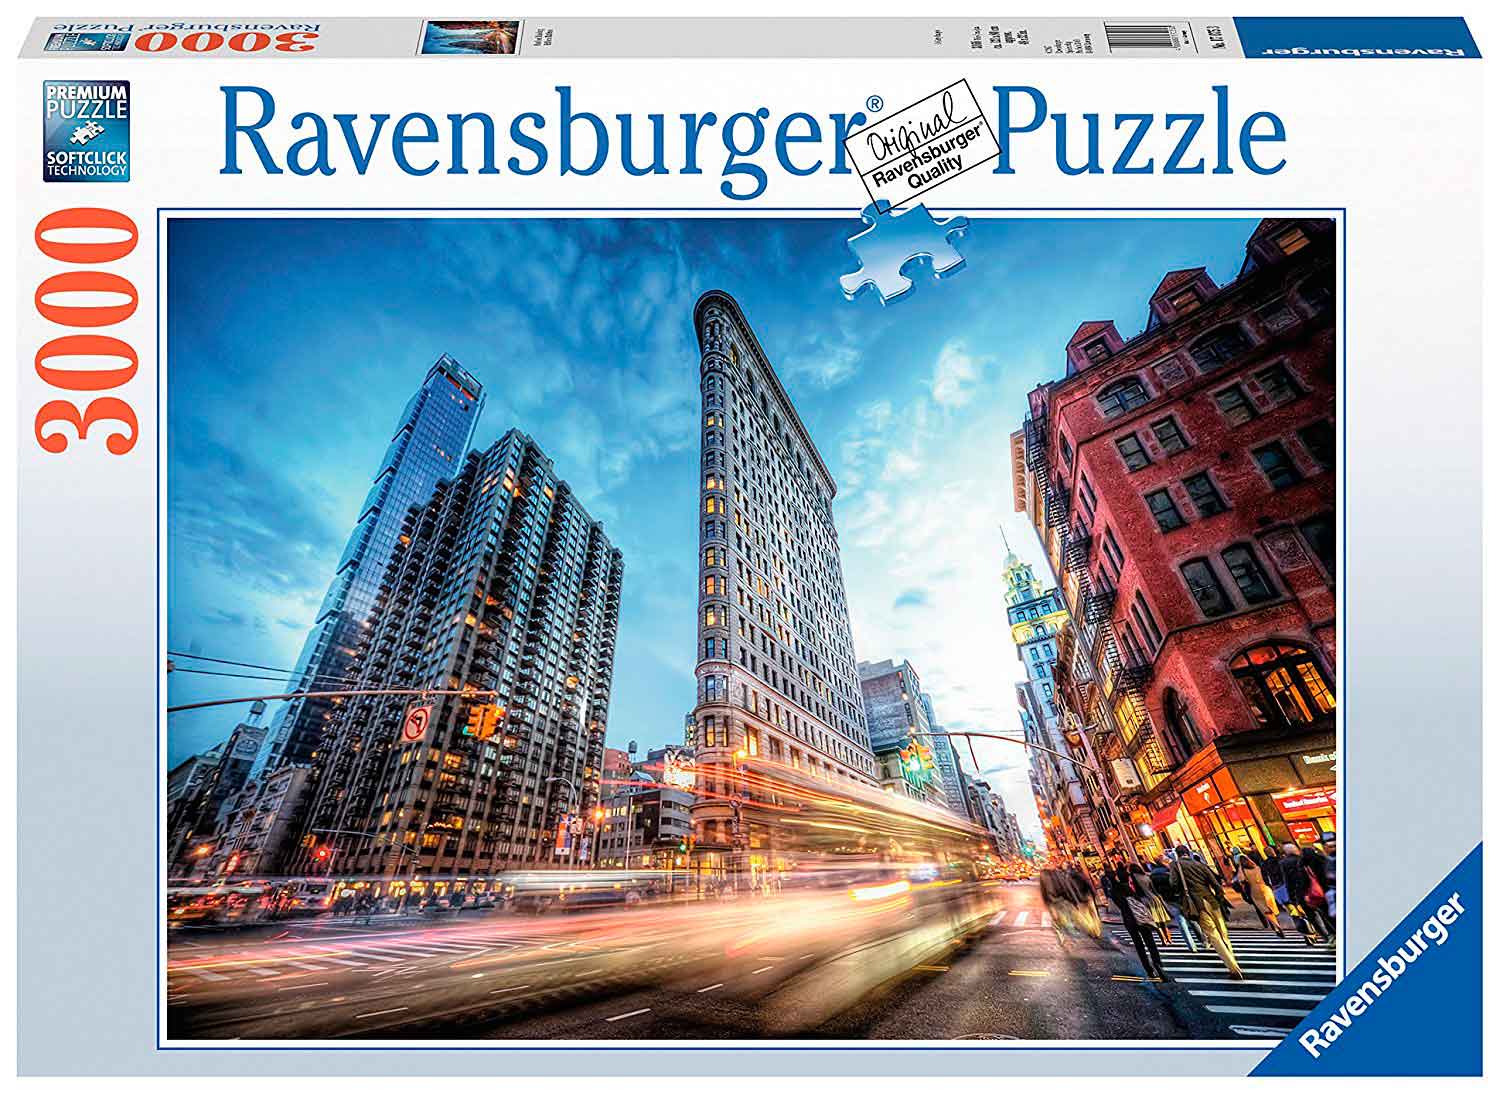 Edificio Flat Iron  Puzzle Ravensburger 3000 Piezas